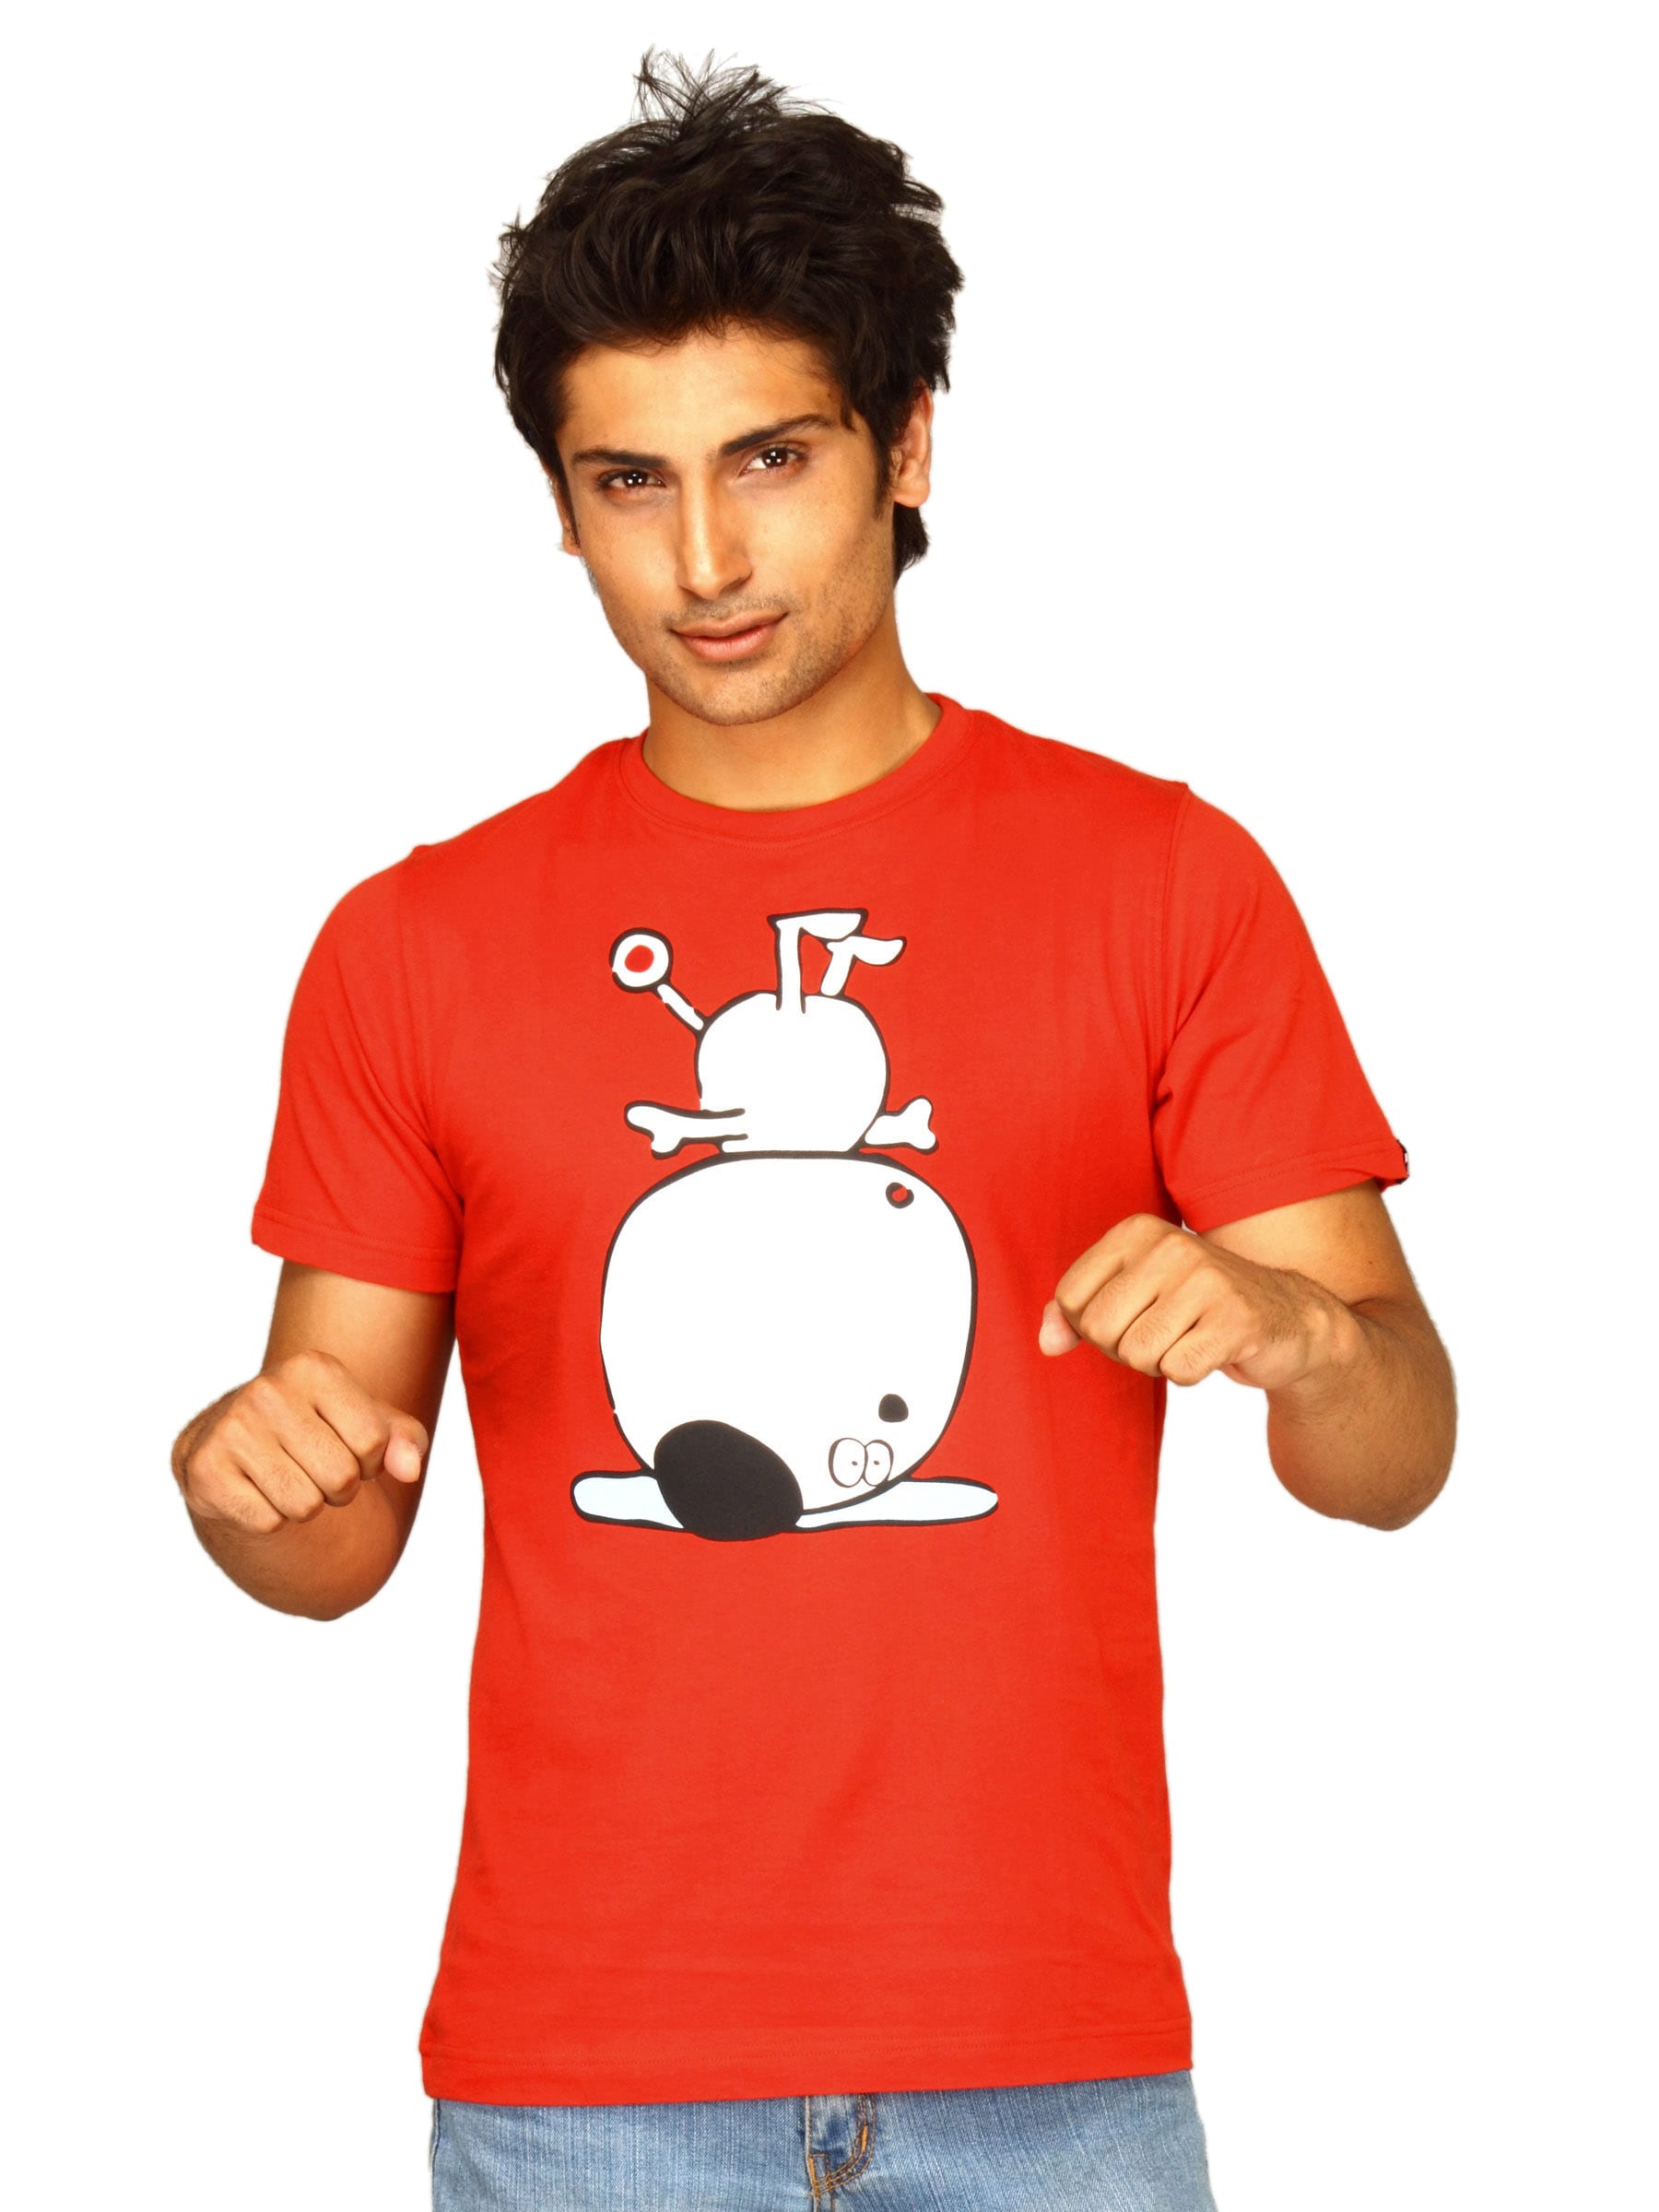 Probase Men's Cartoon Red T-shirt